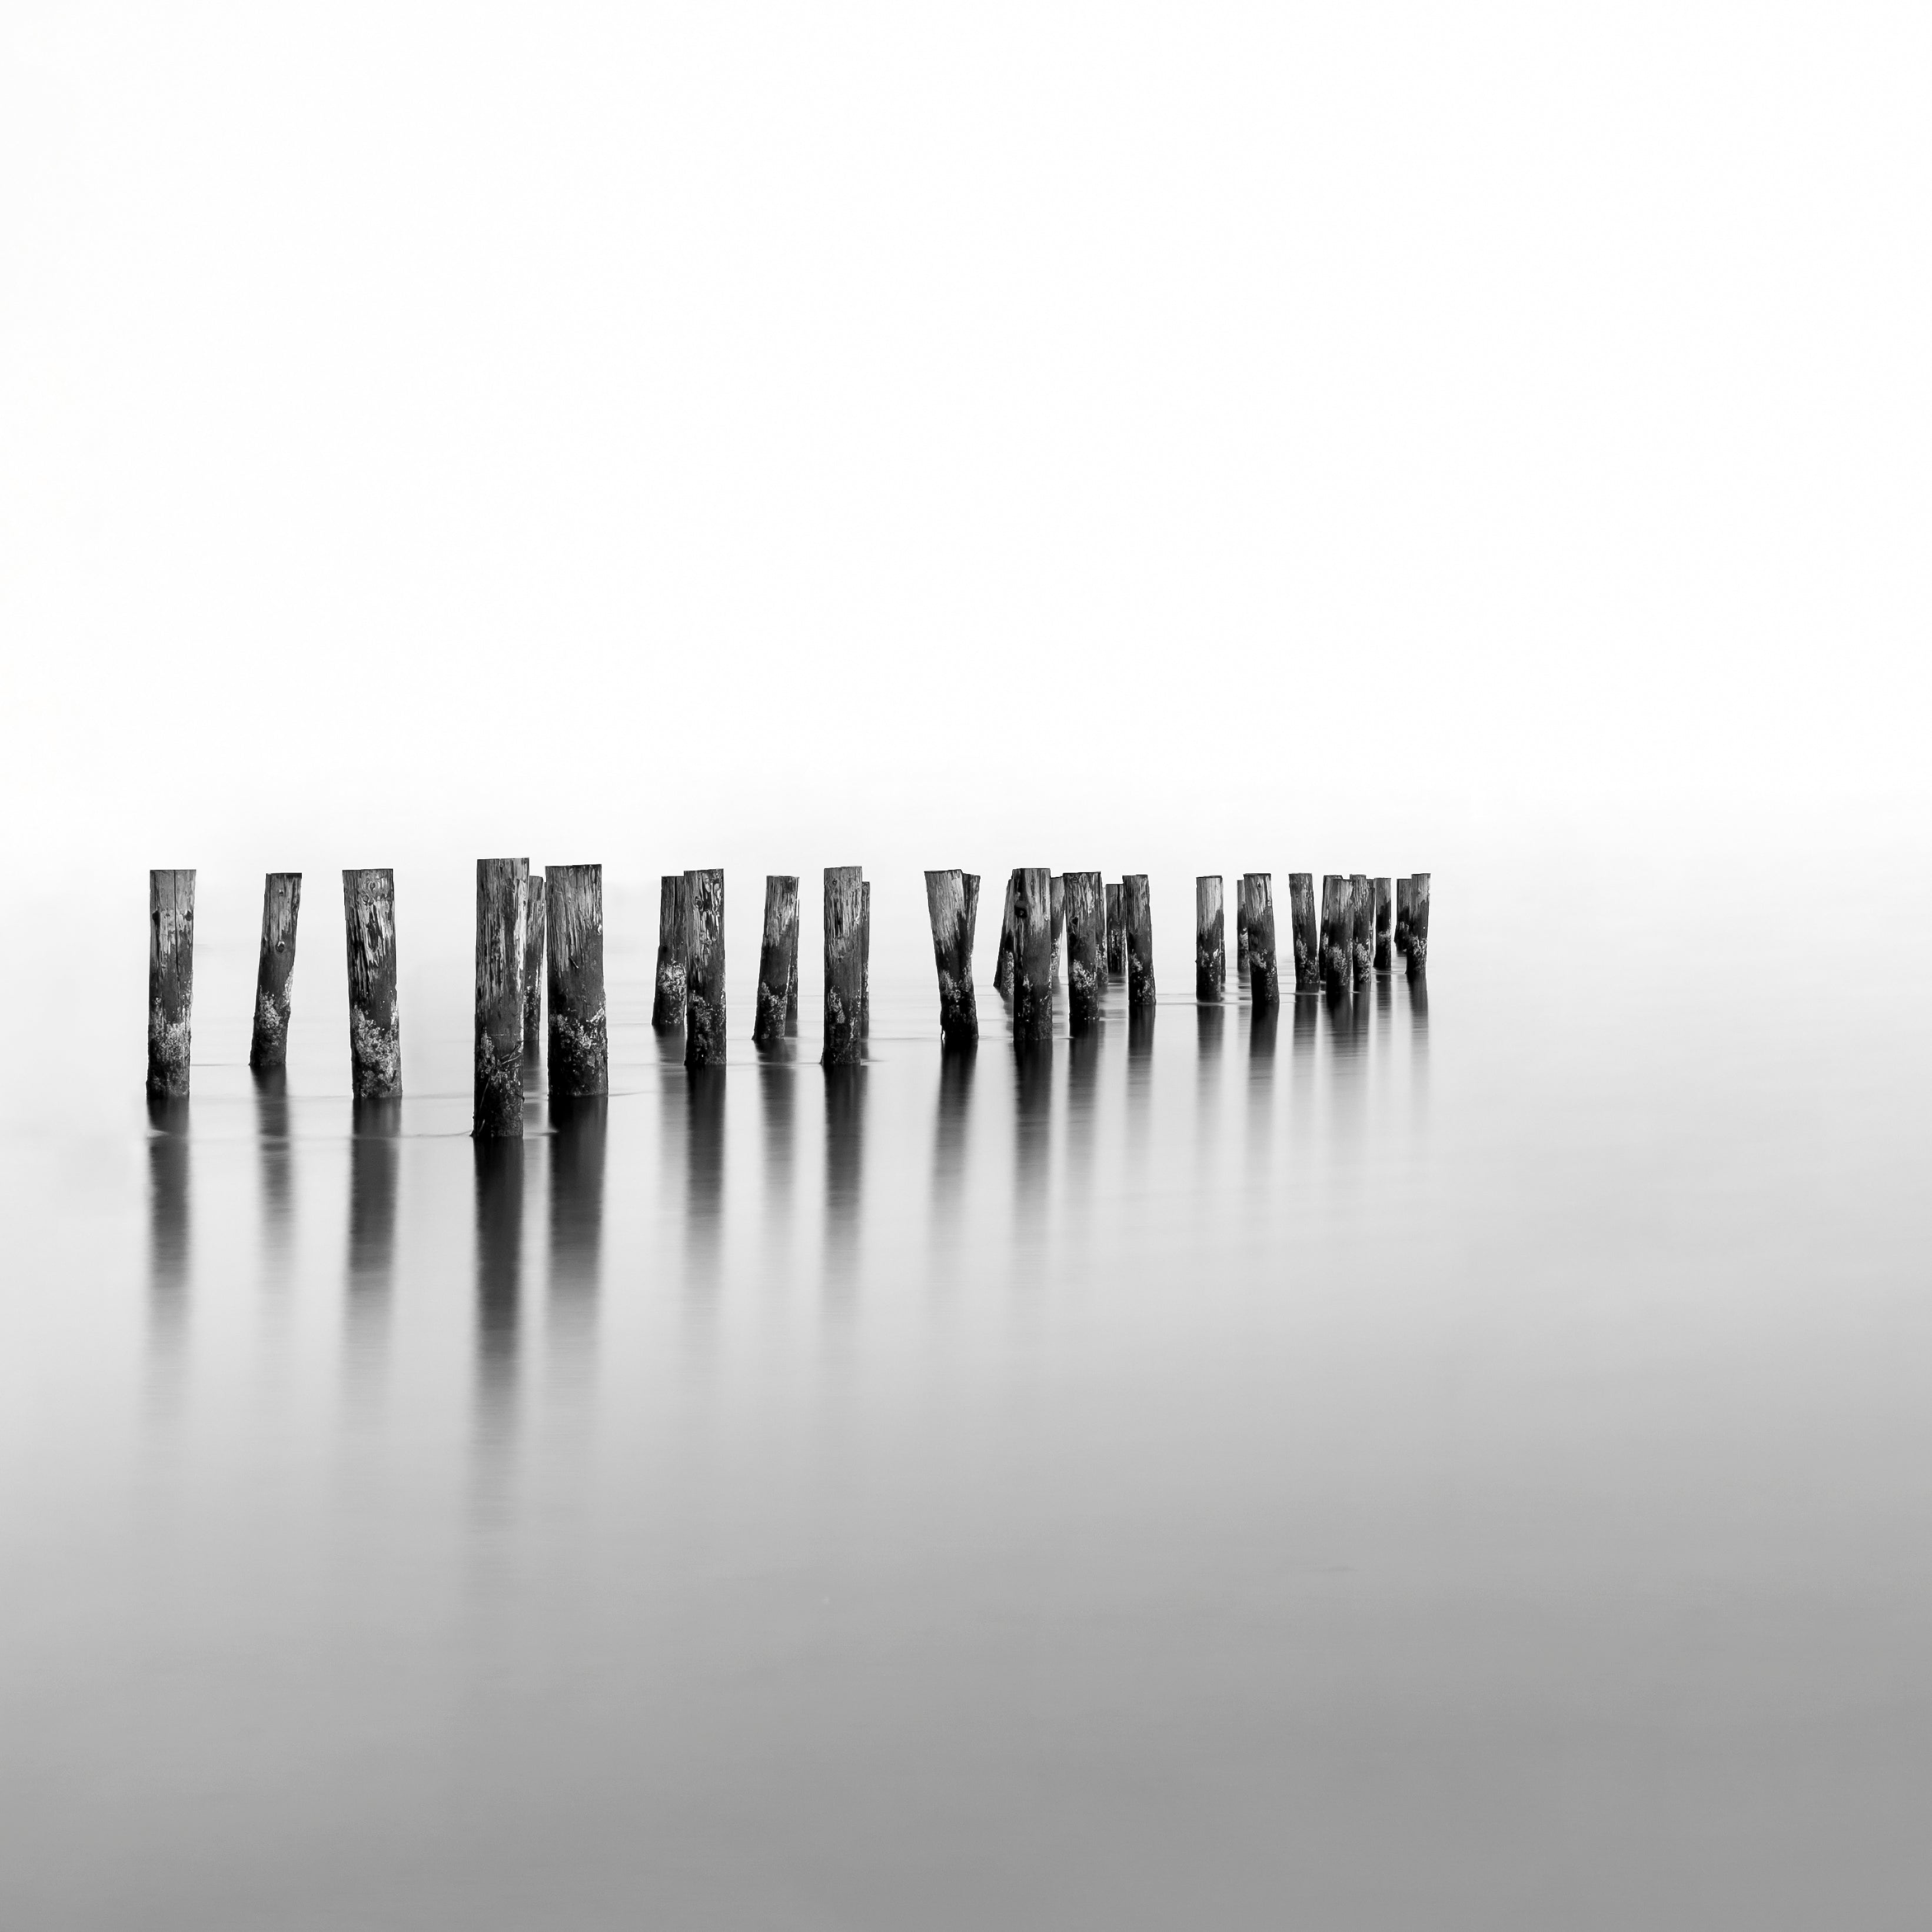 Fine art long exposure photograph of groynes along the Oregon coast